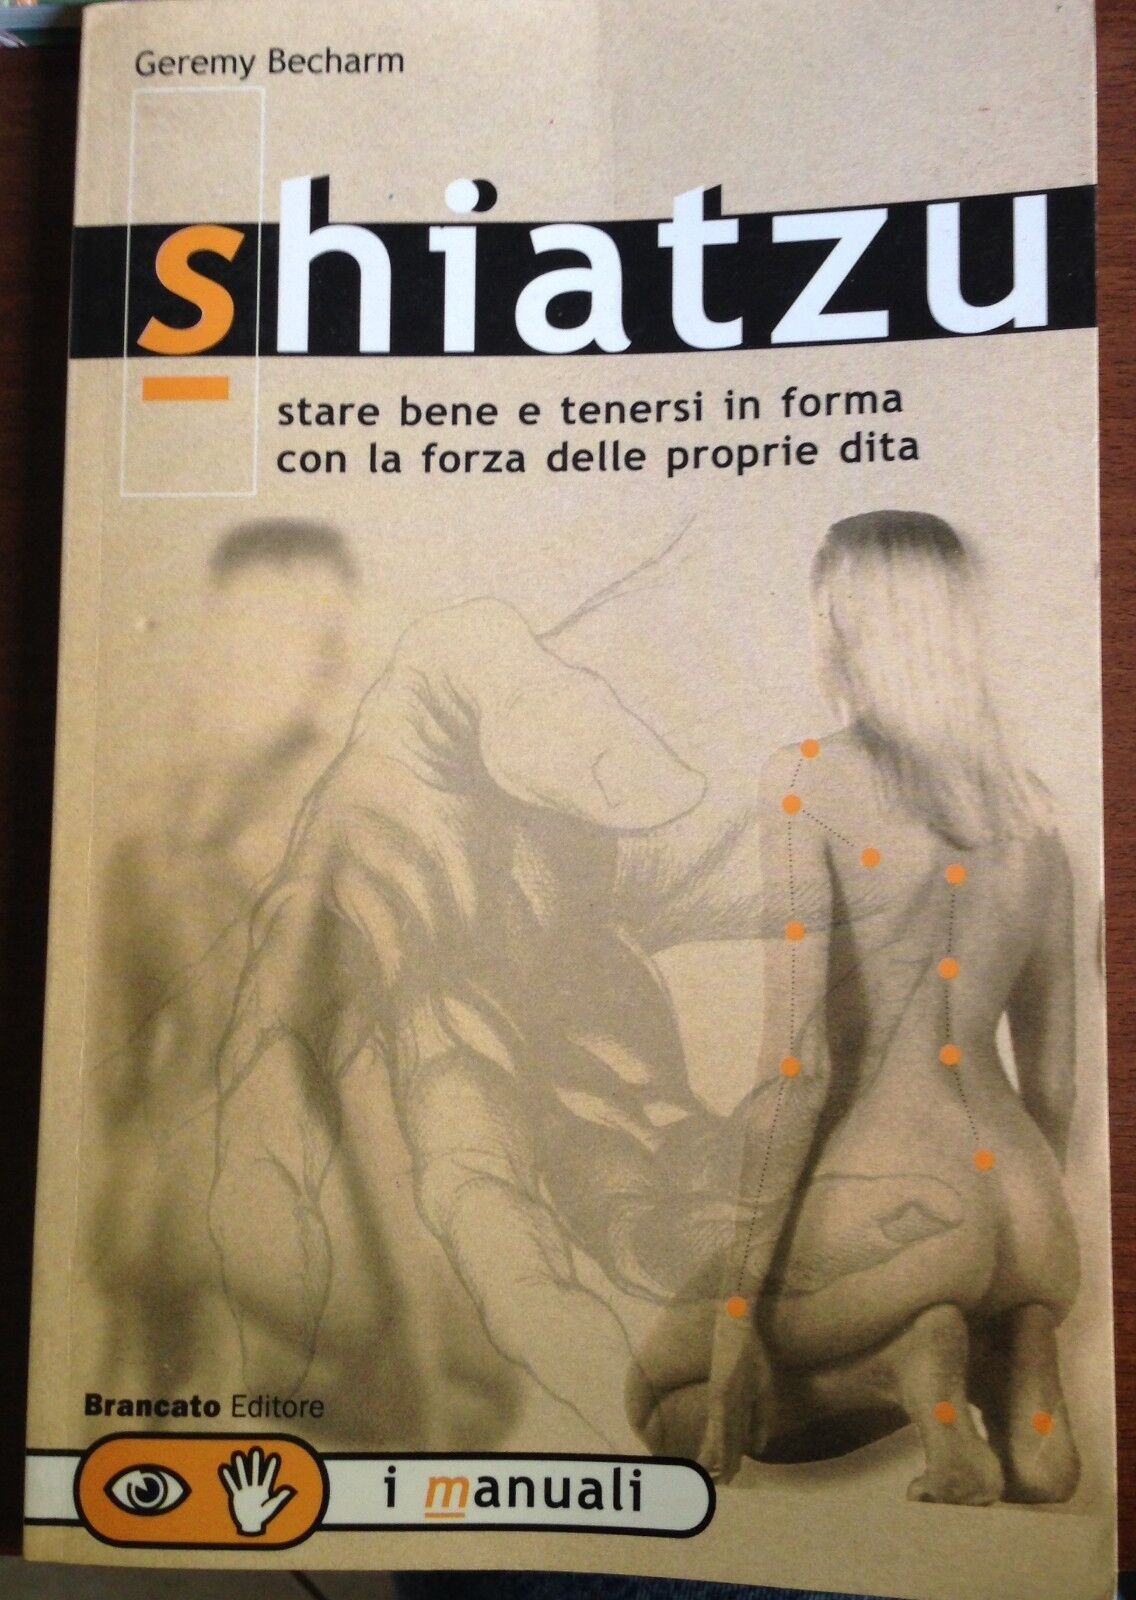 Shiatzu-Geremy Becharm-Brancato-1999-M libro usato